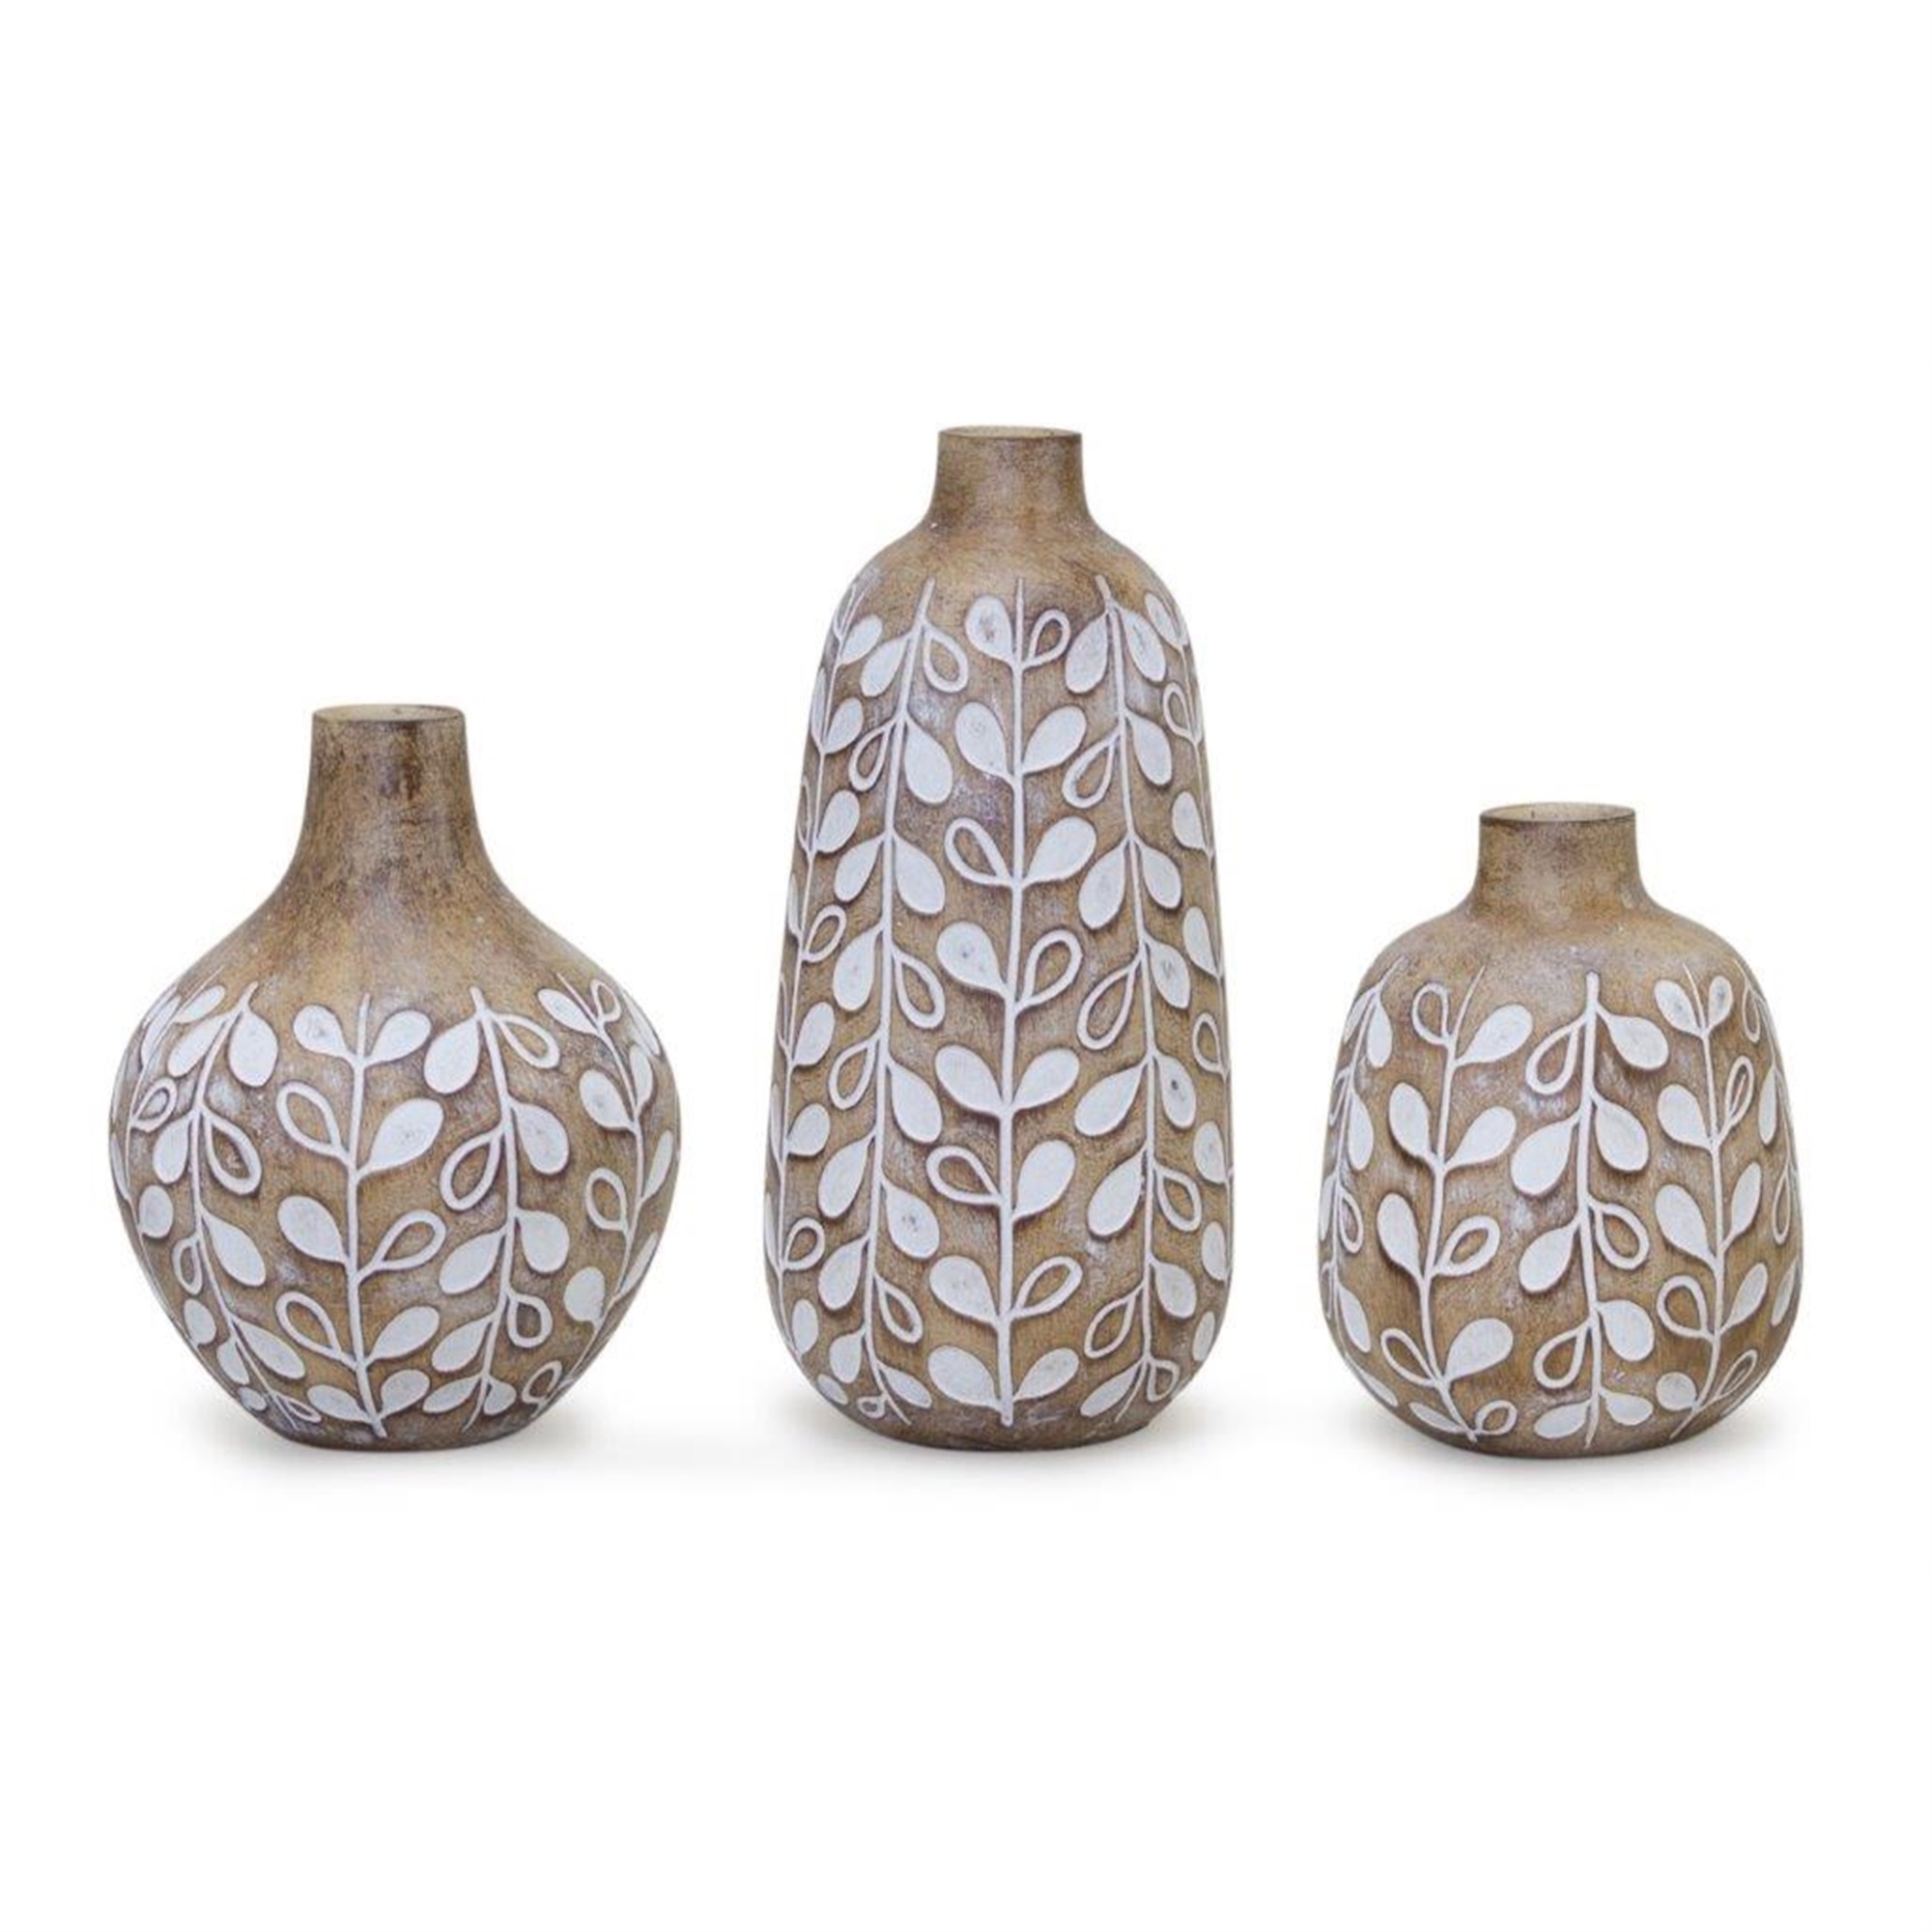 Melrose International Vase (Set of 3) 5.25"H, 6"H, 8.75"H Resin